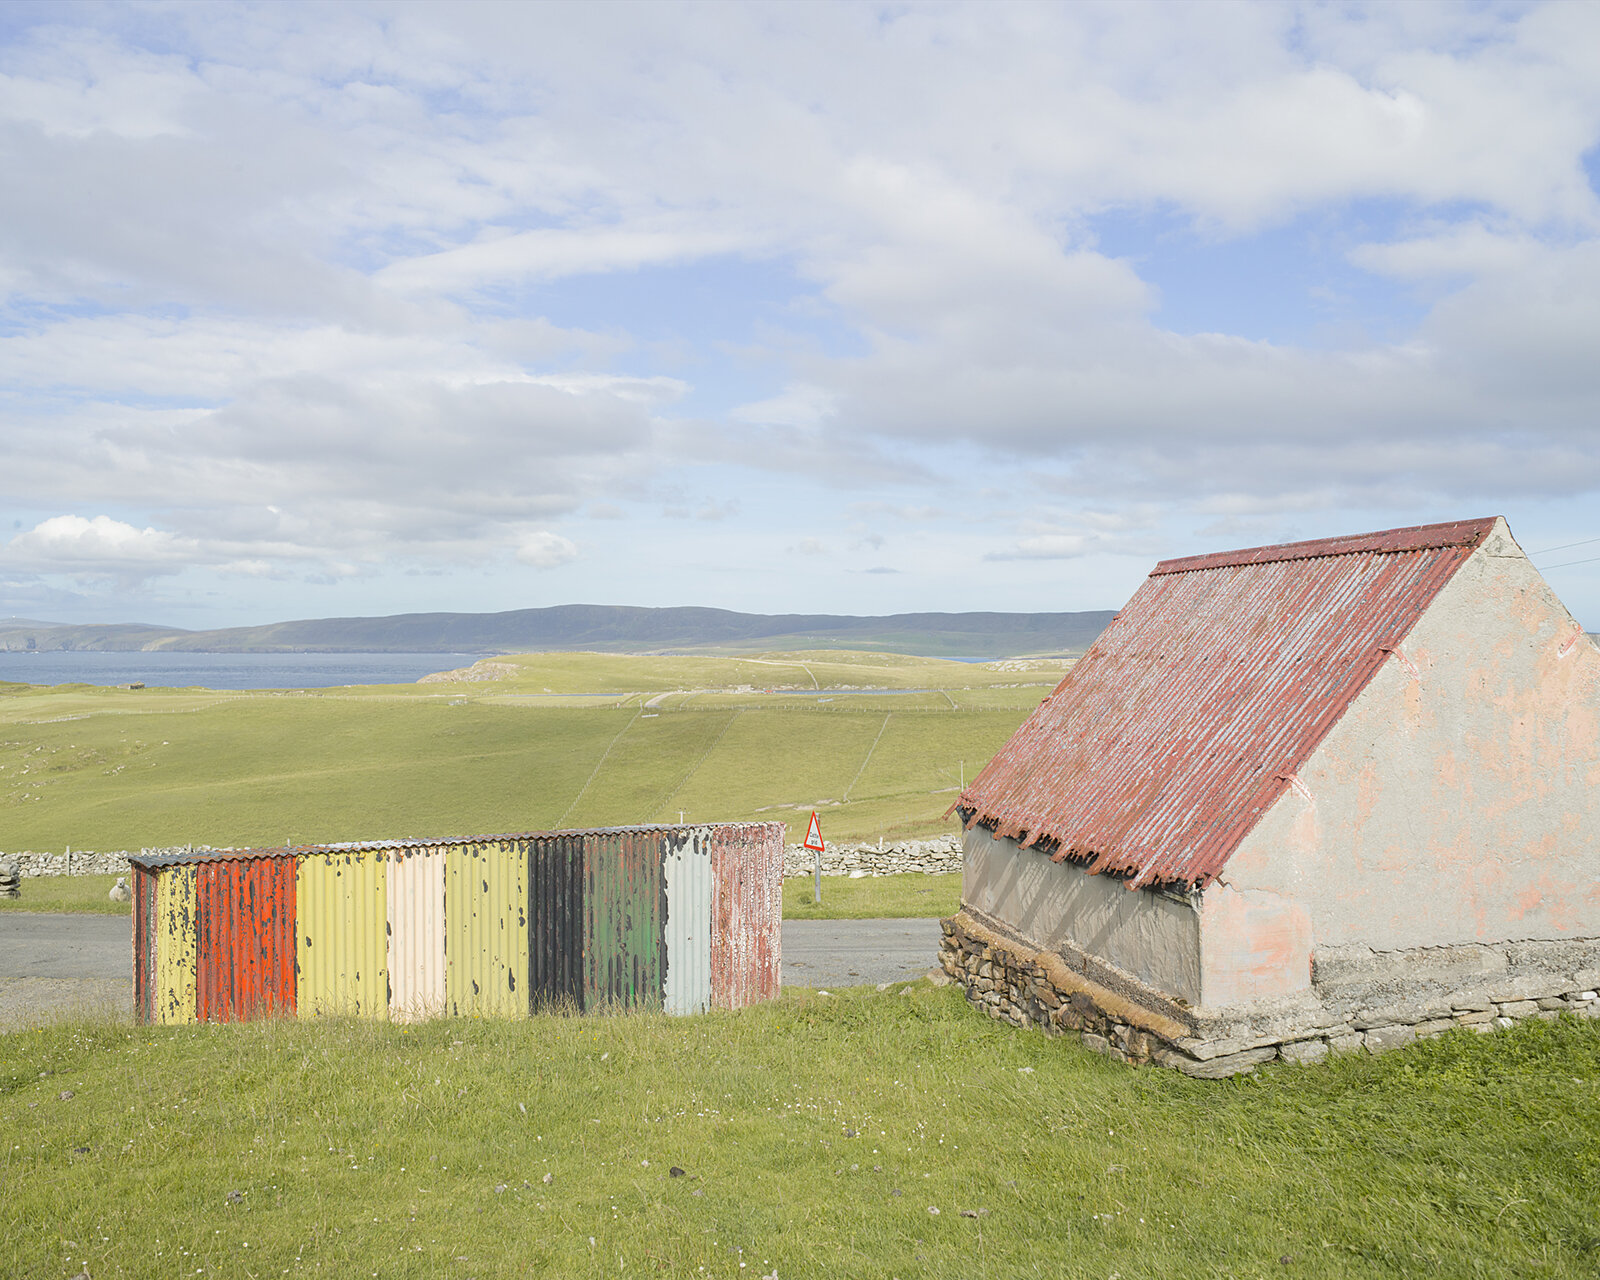 Sheds of Shetland, 2018-2019